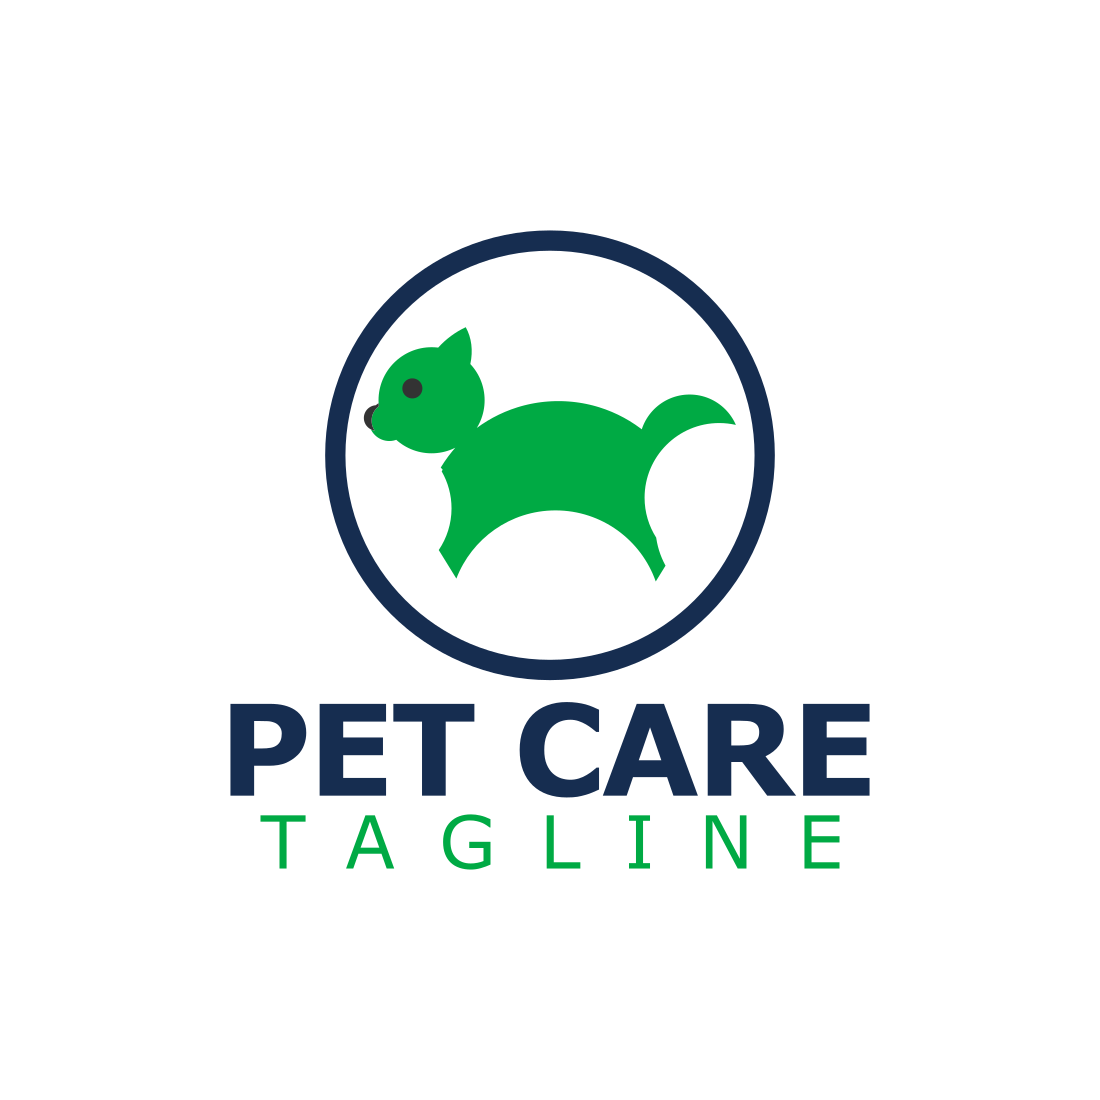 Elegant Pet Care Logo Design Template cover image.